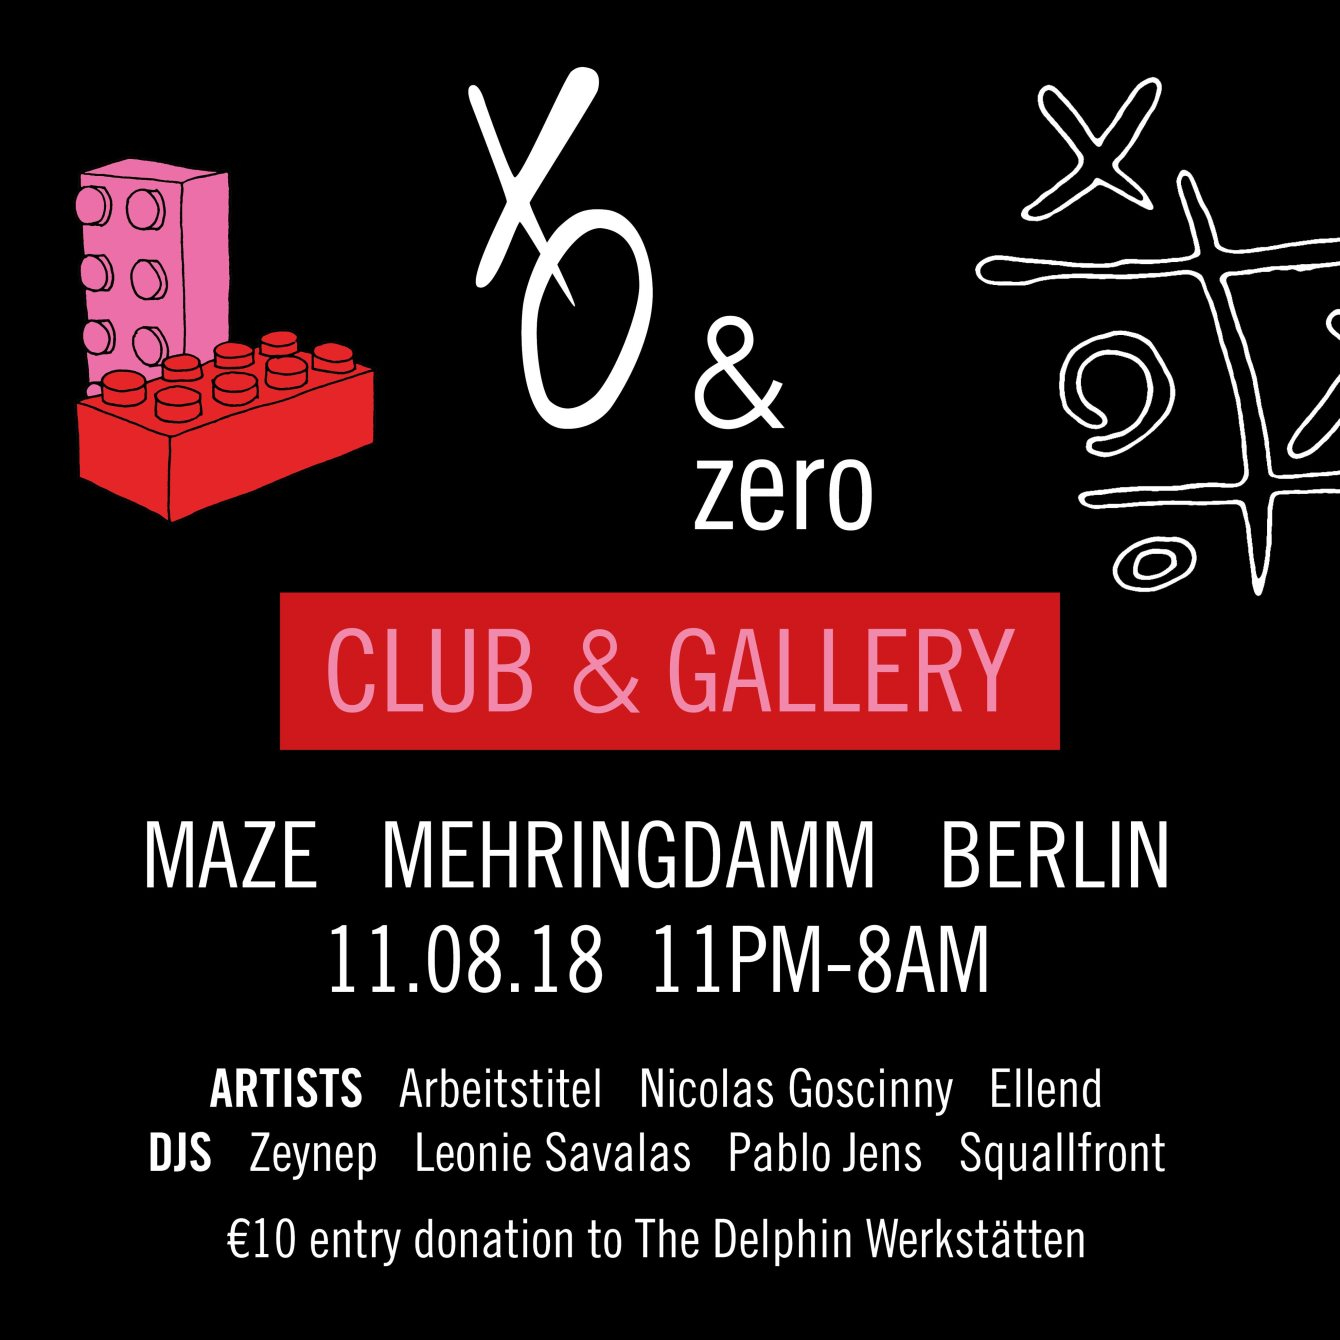 XO & Zero Charity Club & Gallery - Flyer front